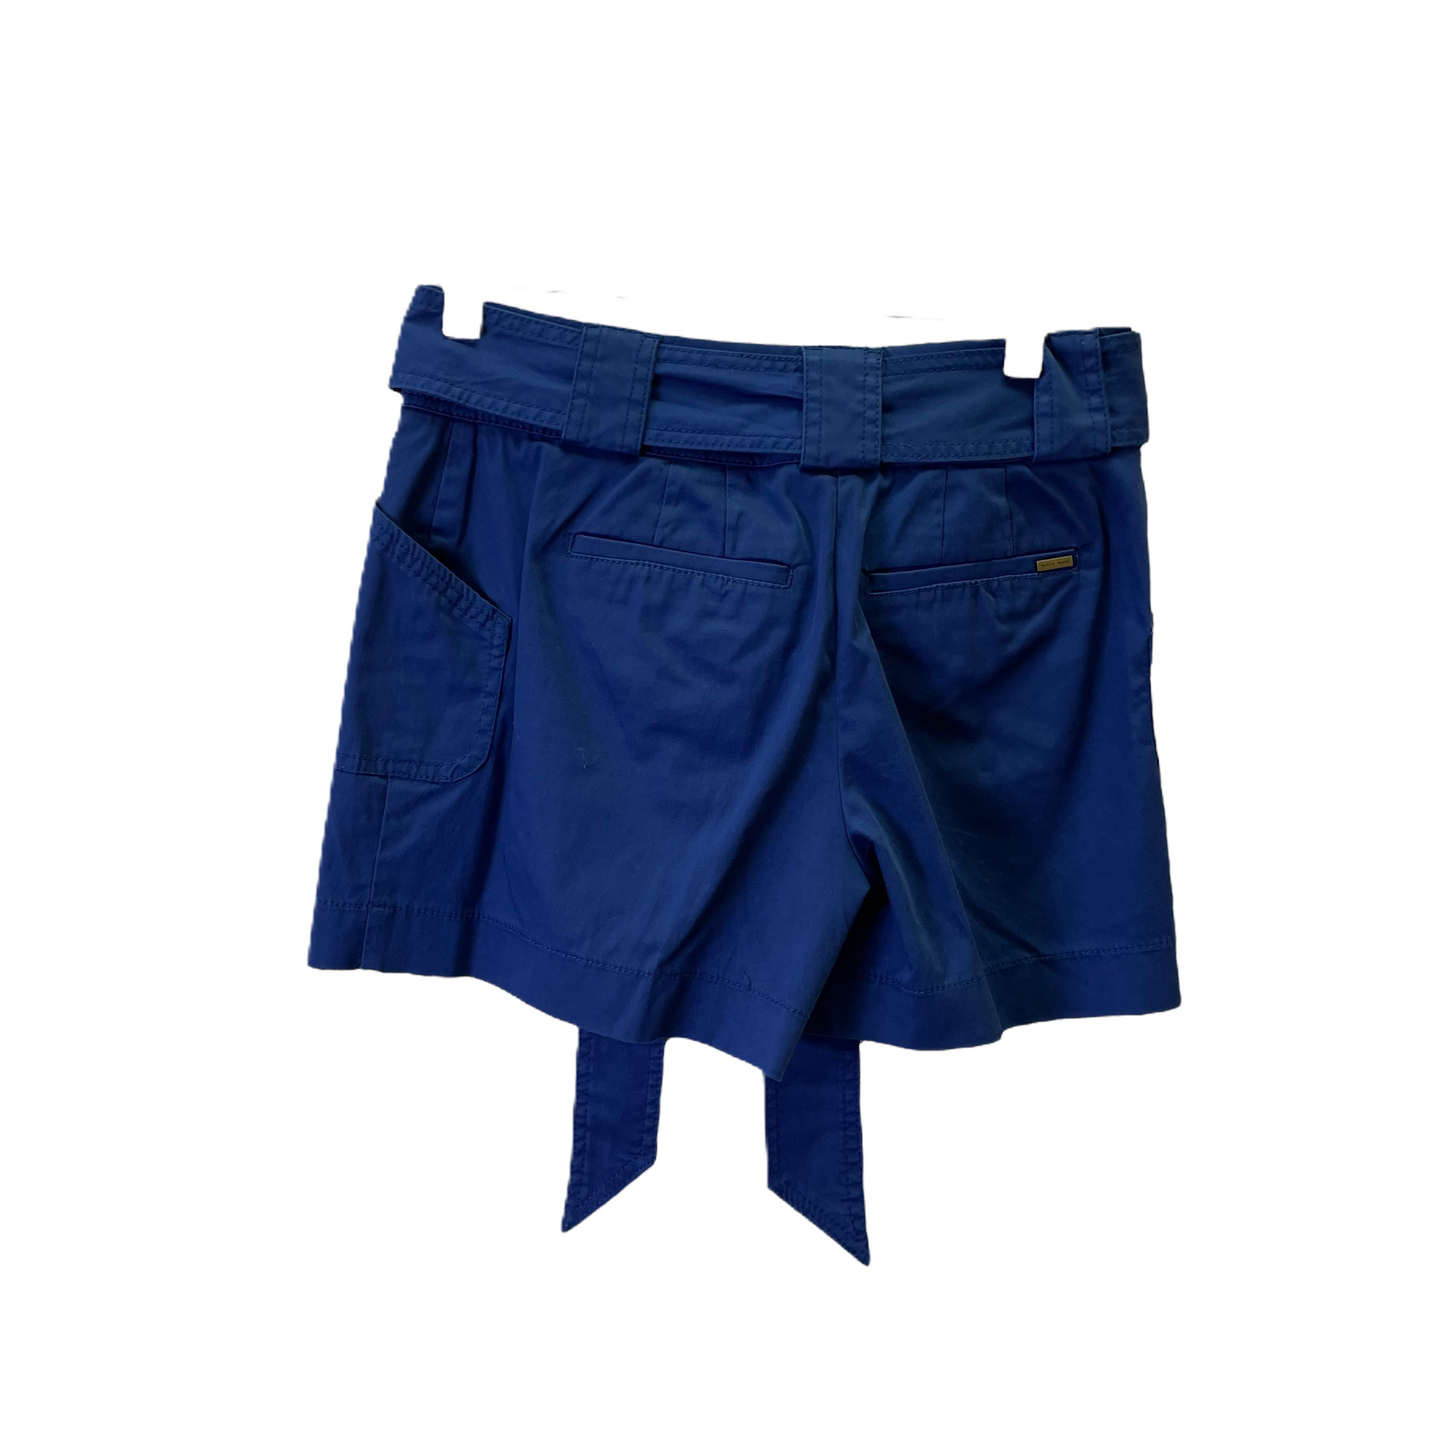 Blue Shorts By White House Black Market, Size: 4